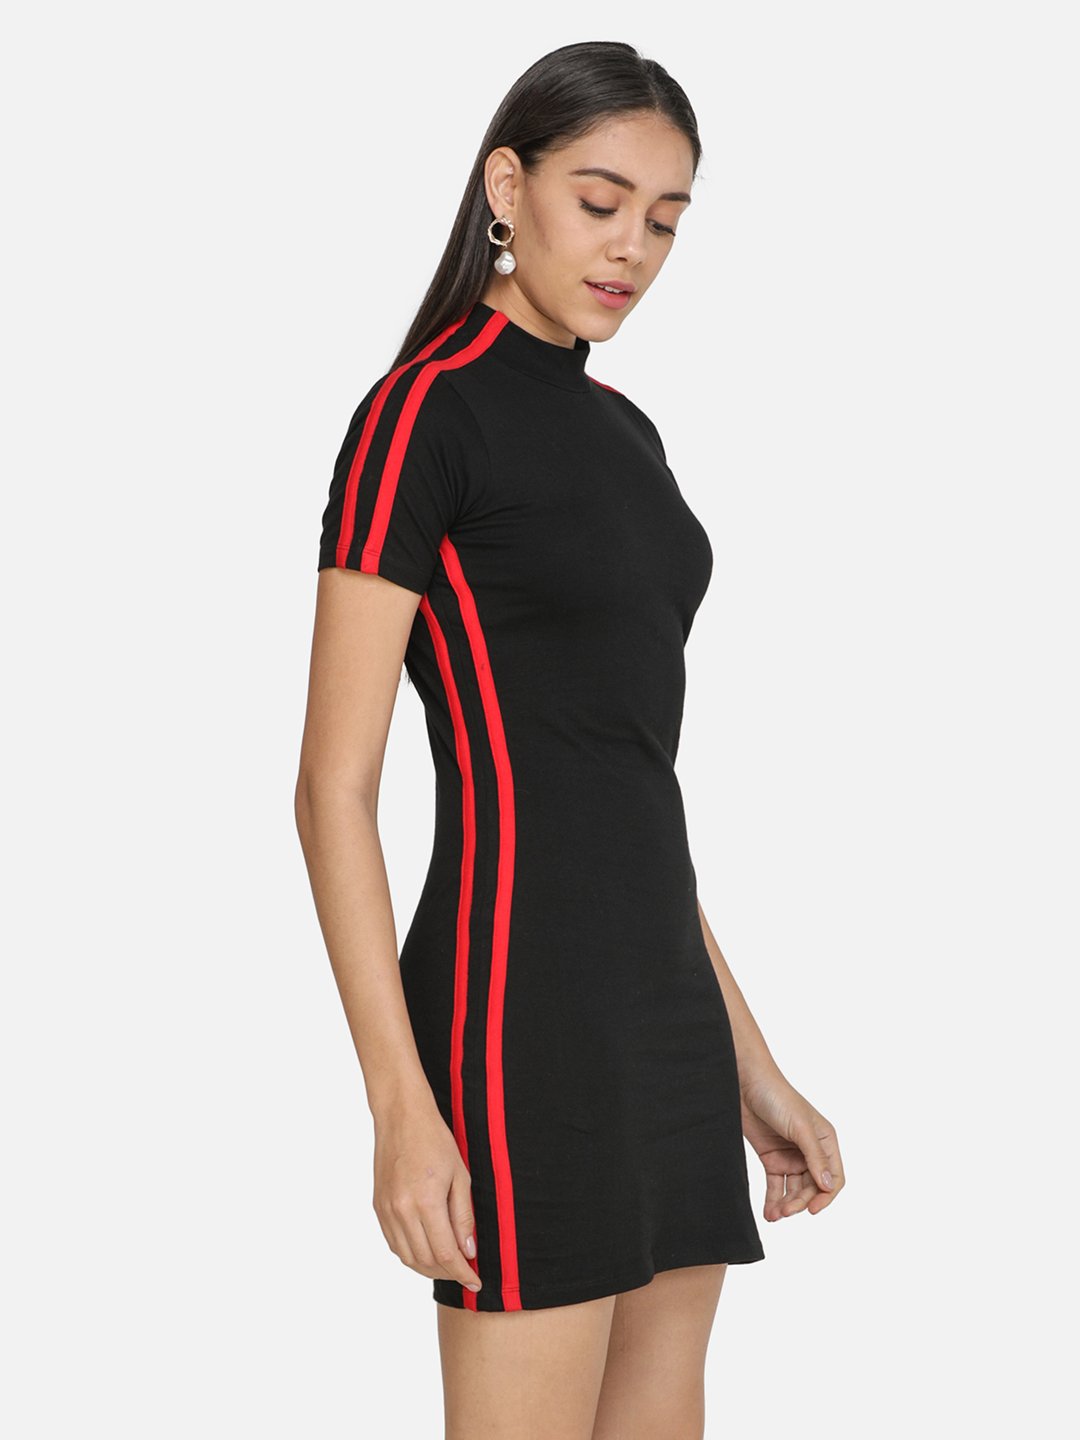 SCORPIUS Black Striped Mini dress